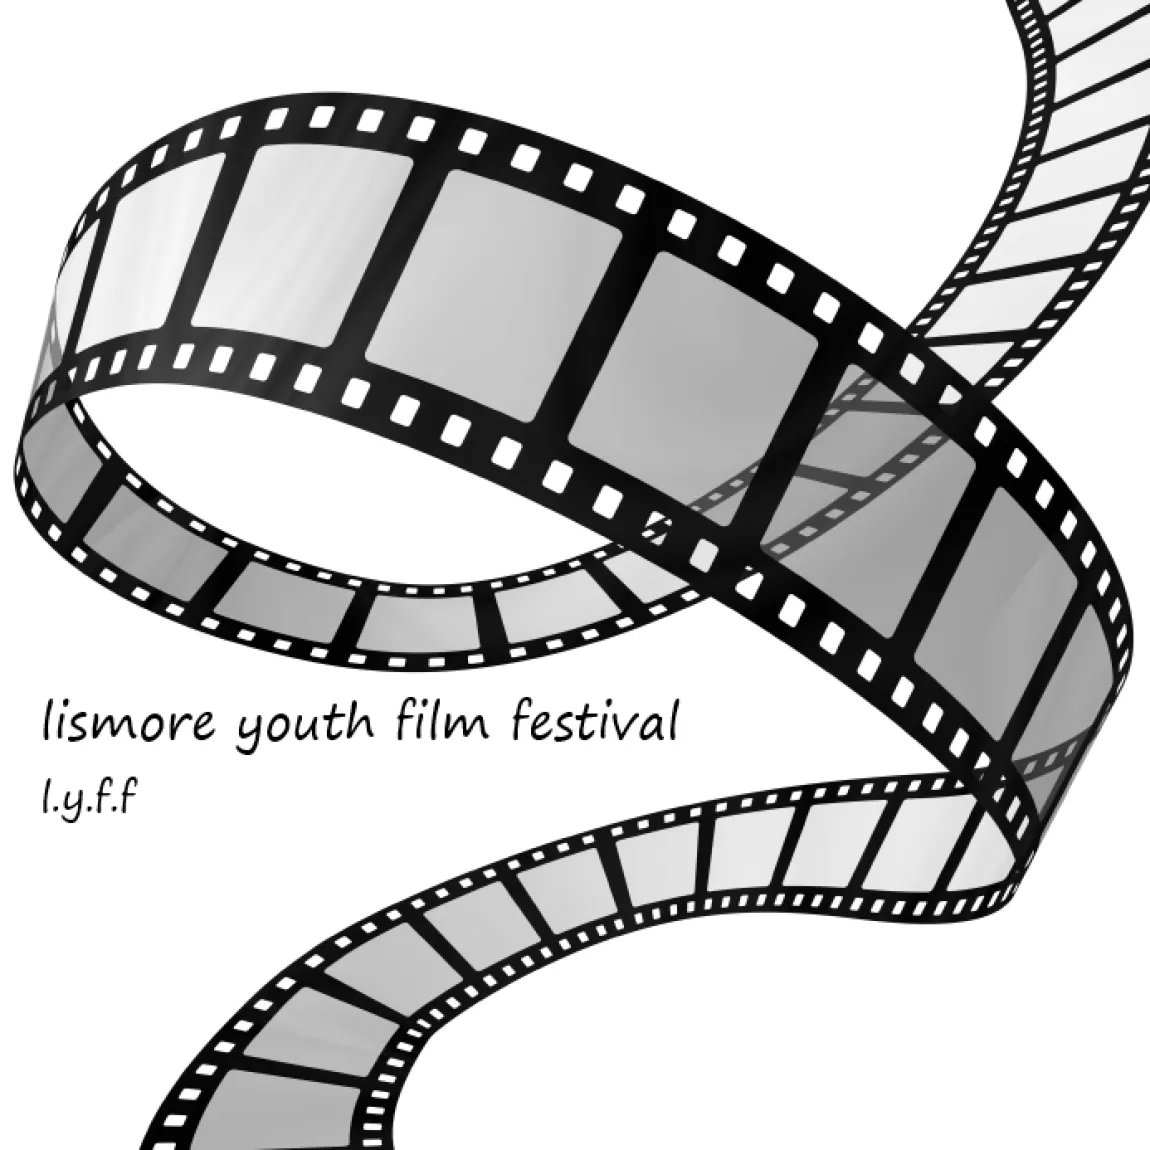 Lismore Youth Film Festival